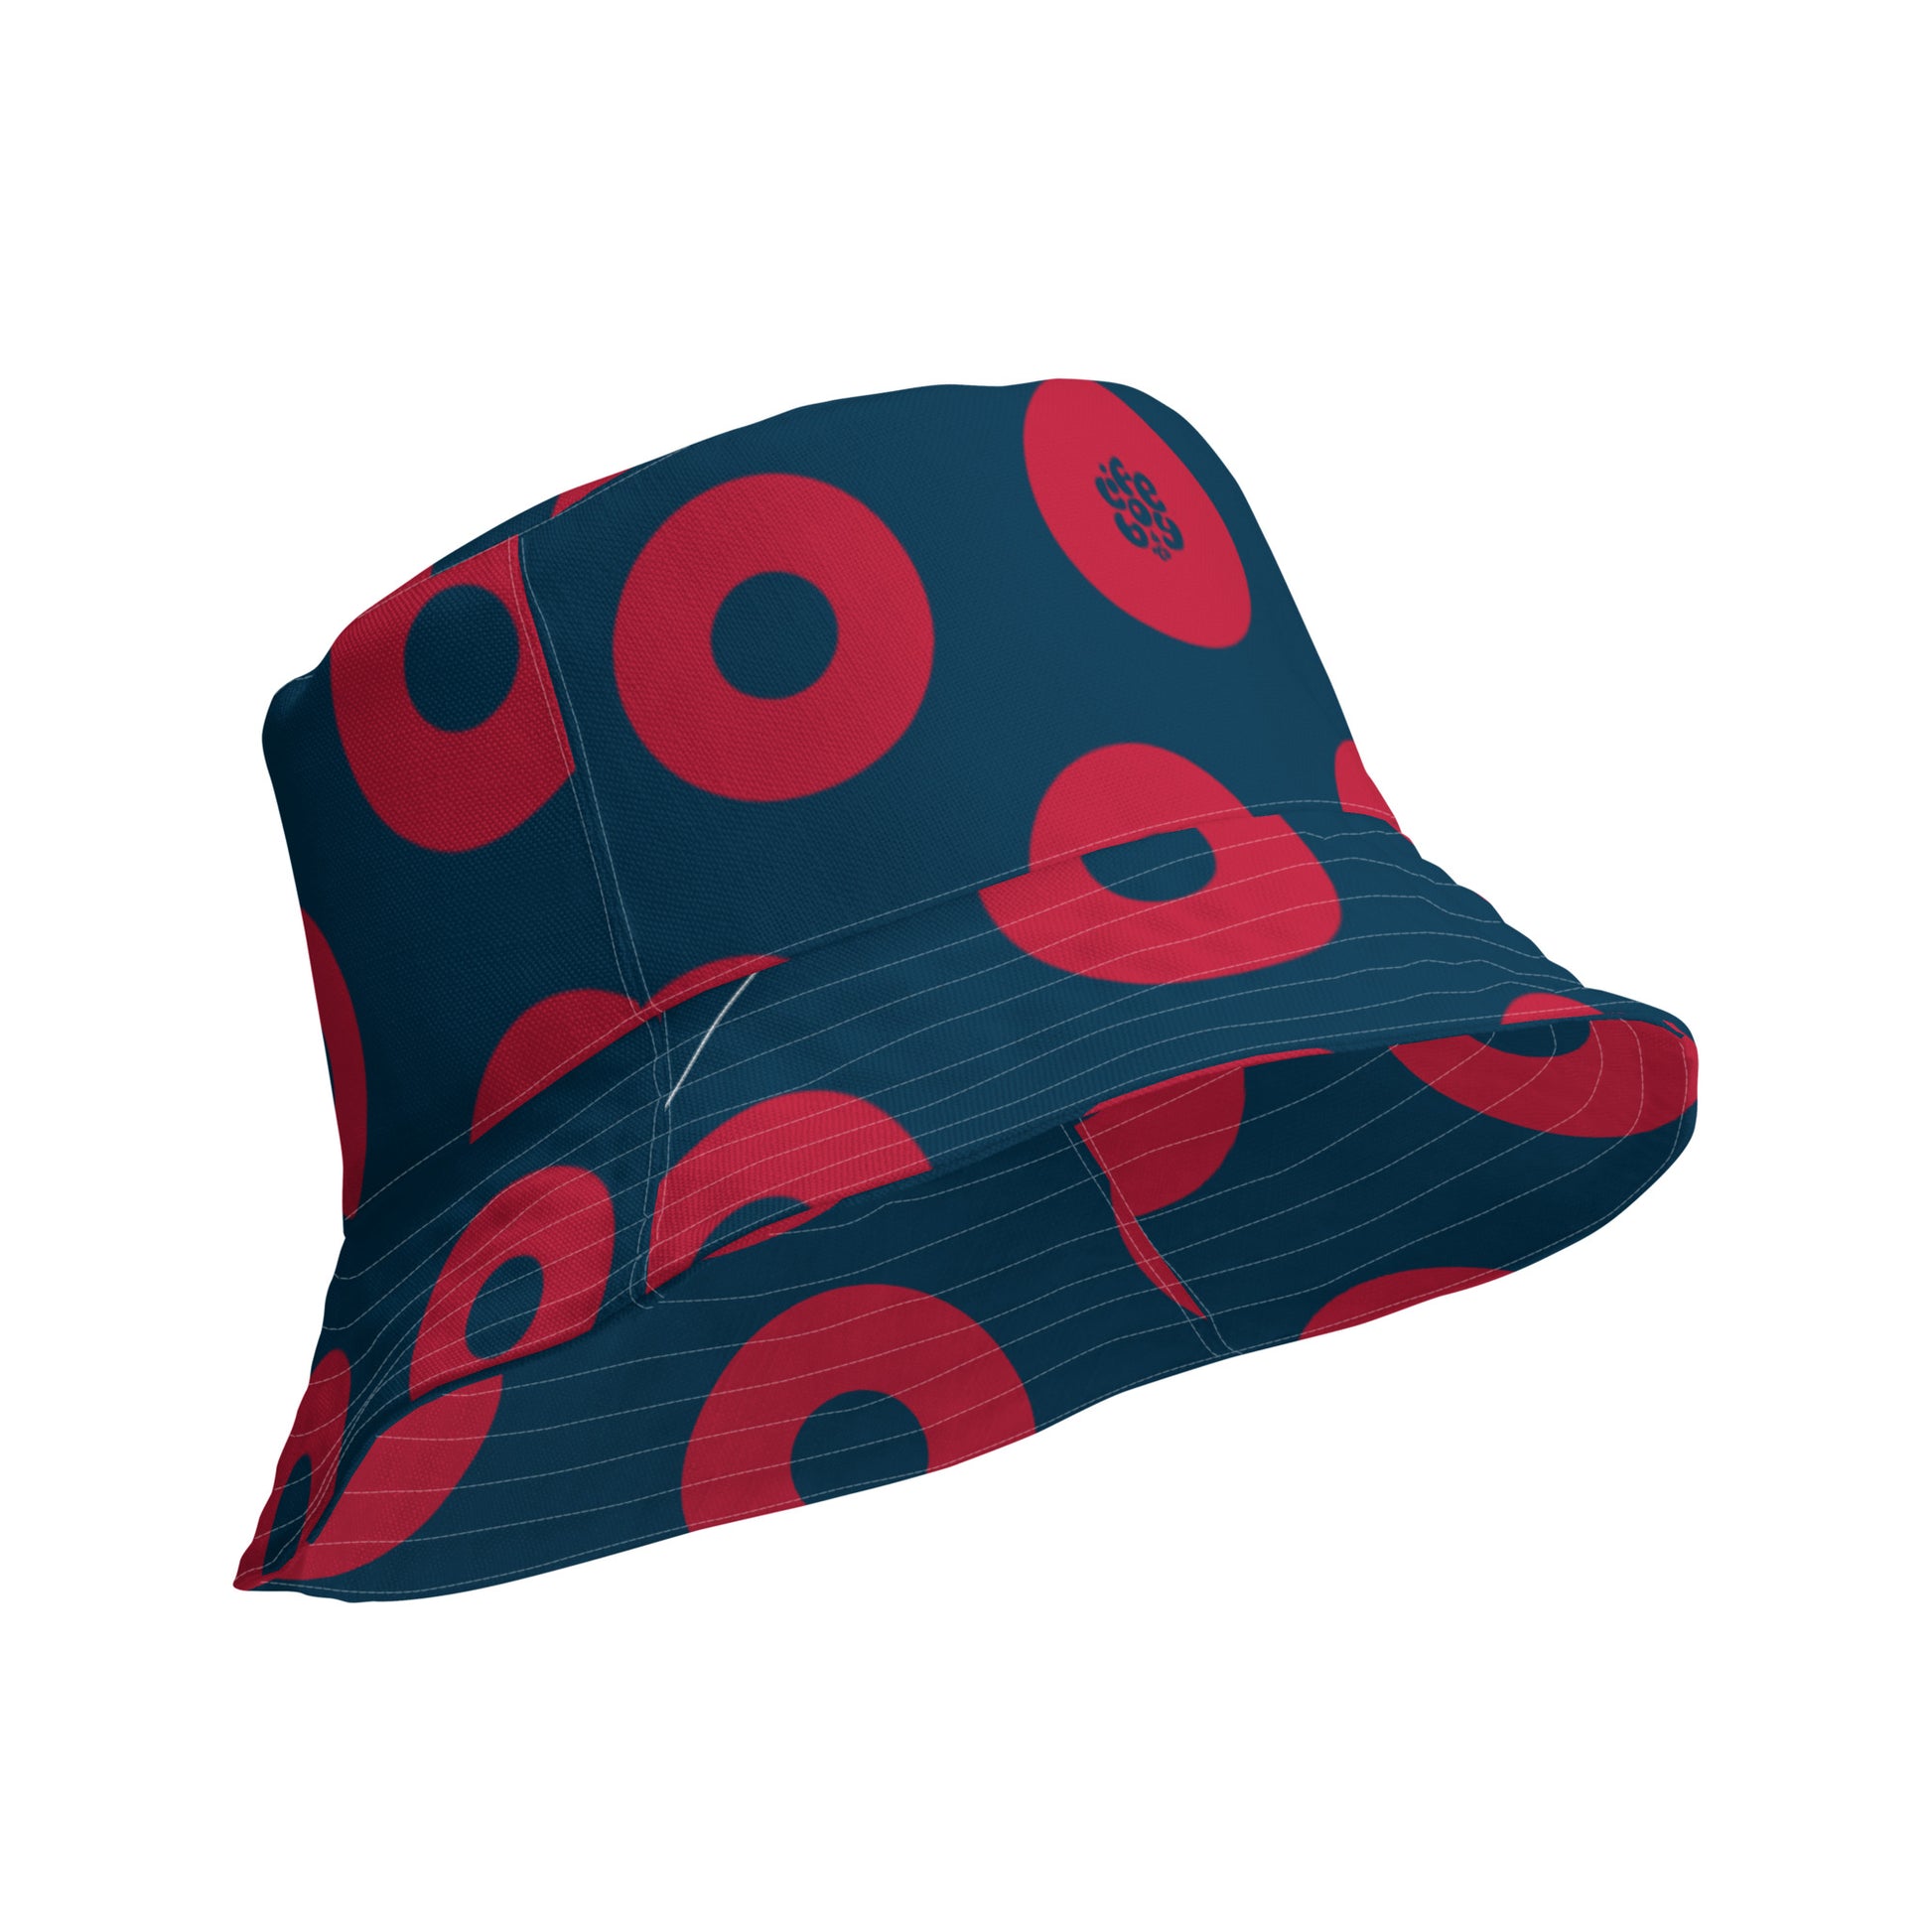 Blue Polka Dot Bucket Hat